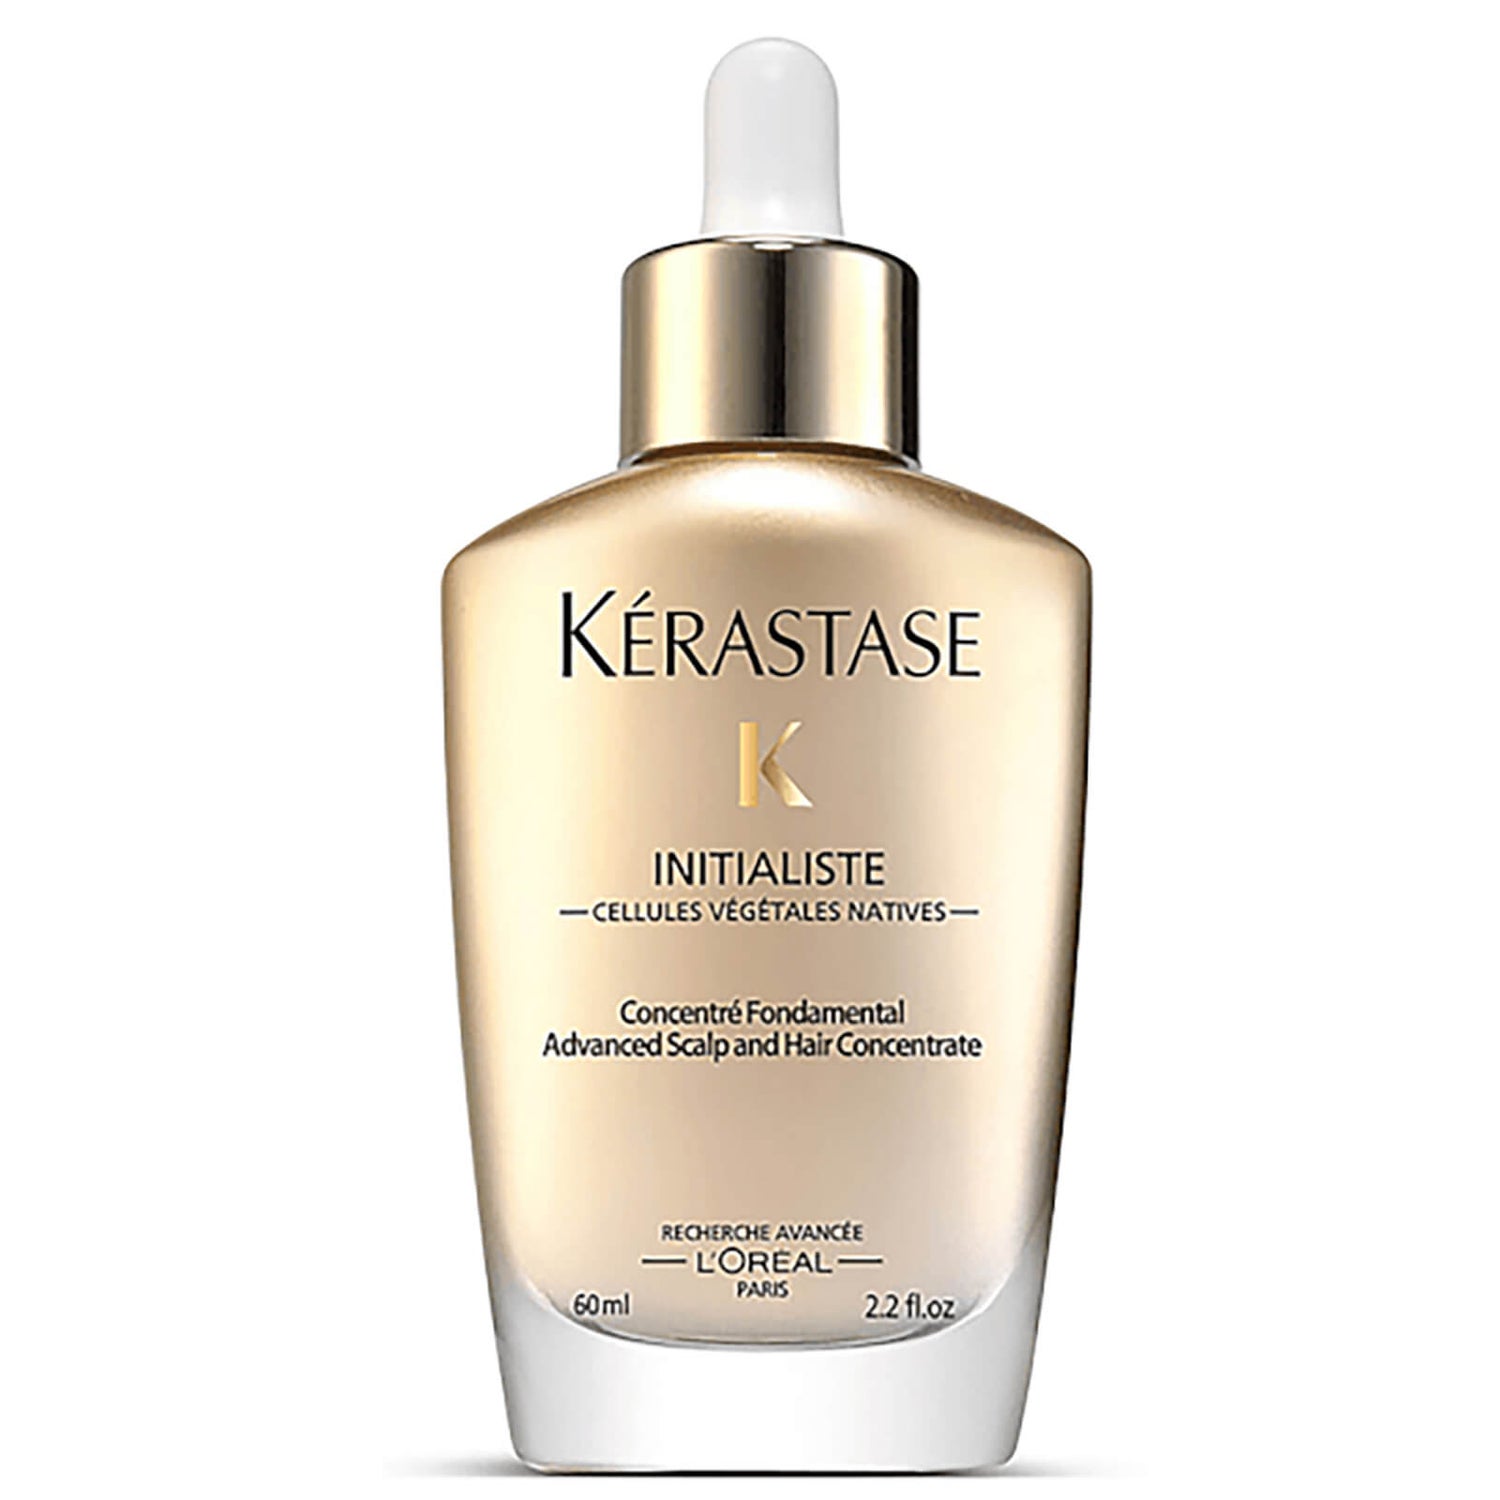 Kérastase Initialiste Advanced Scalp and Hair Concentrate (60 ml)